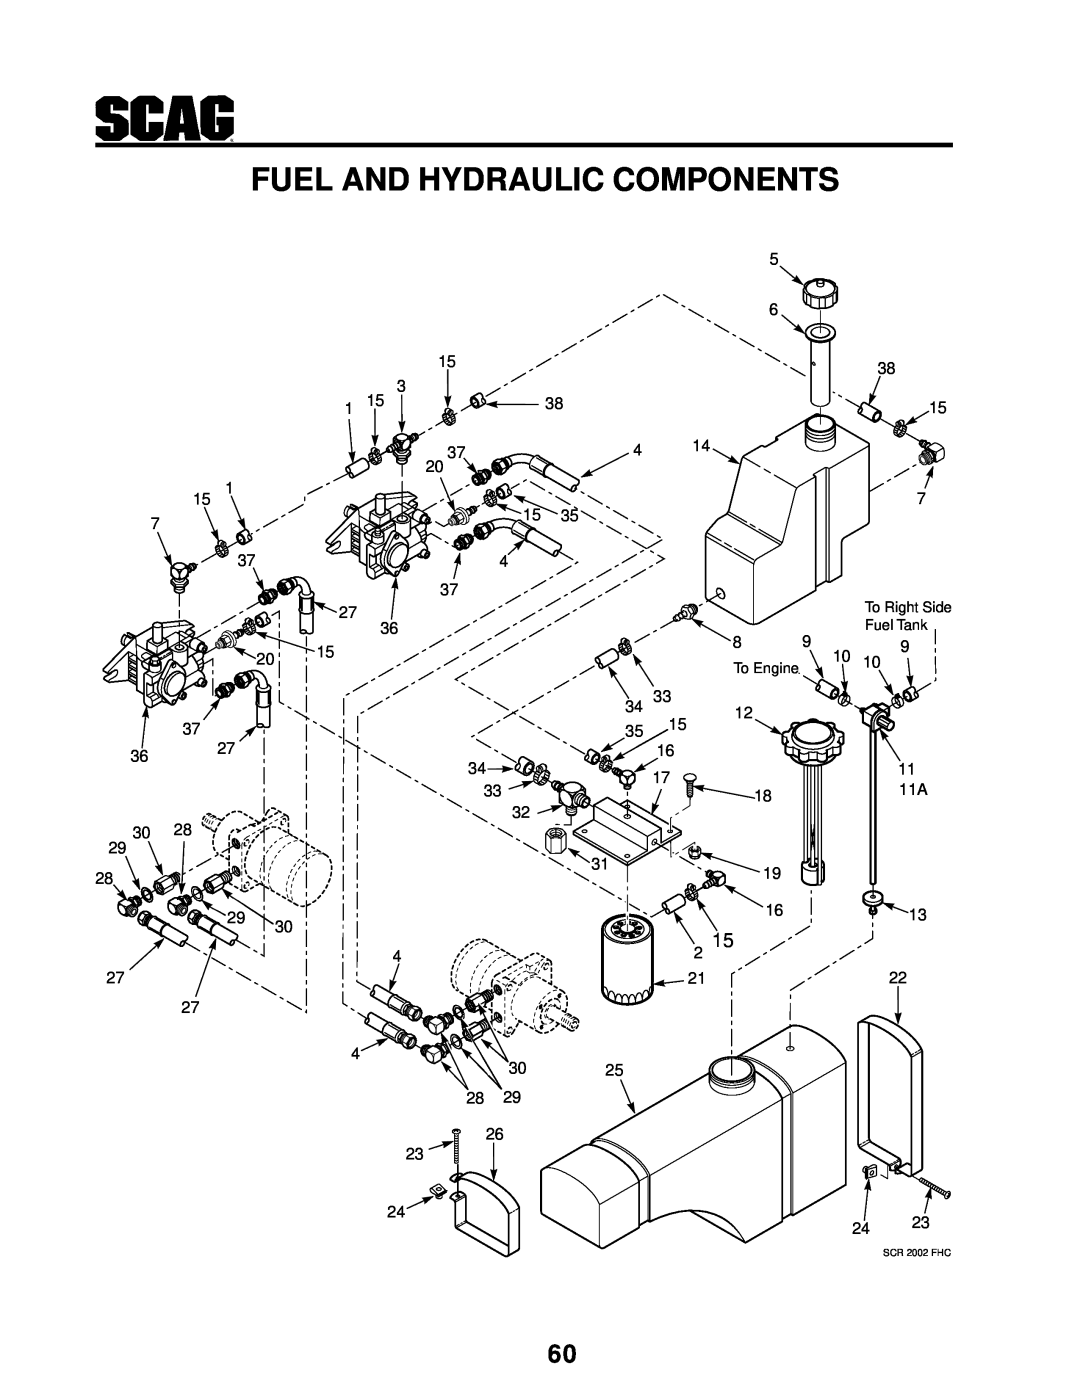 MB QUART manual Fuel And Hydraulic Components, SCR 2002 FHC 